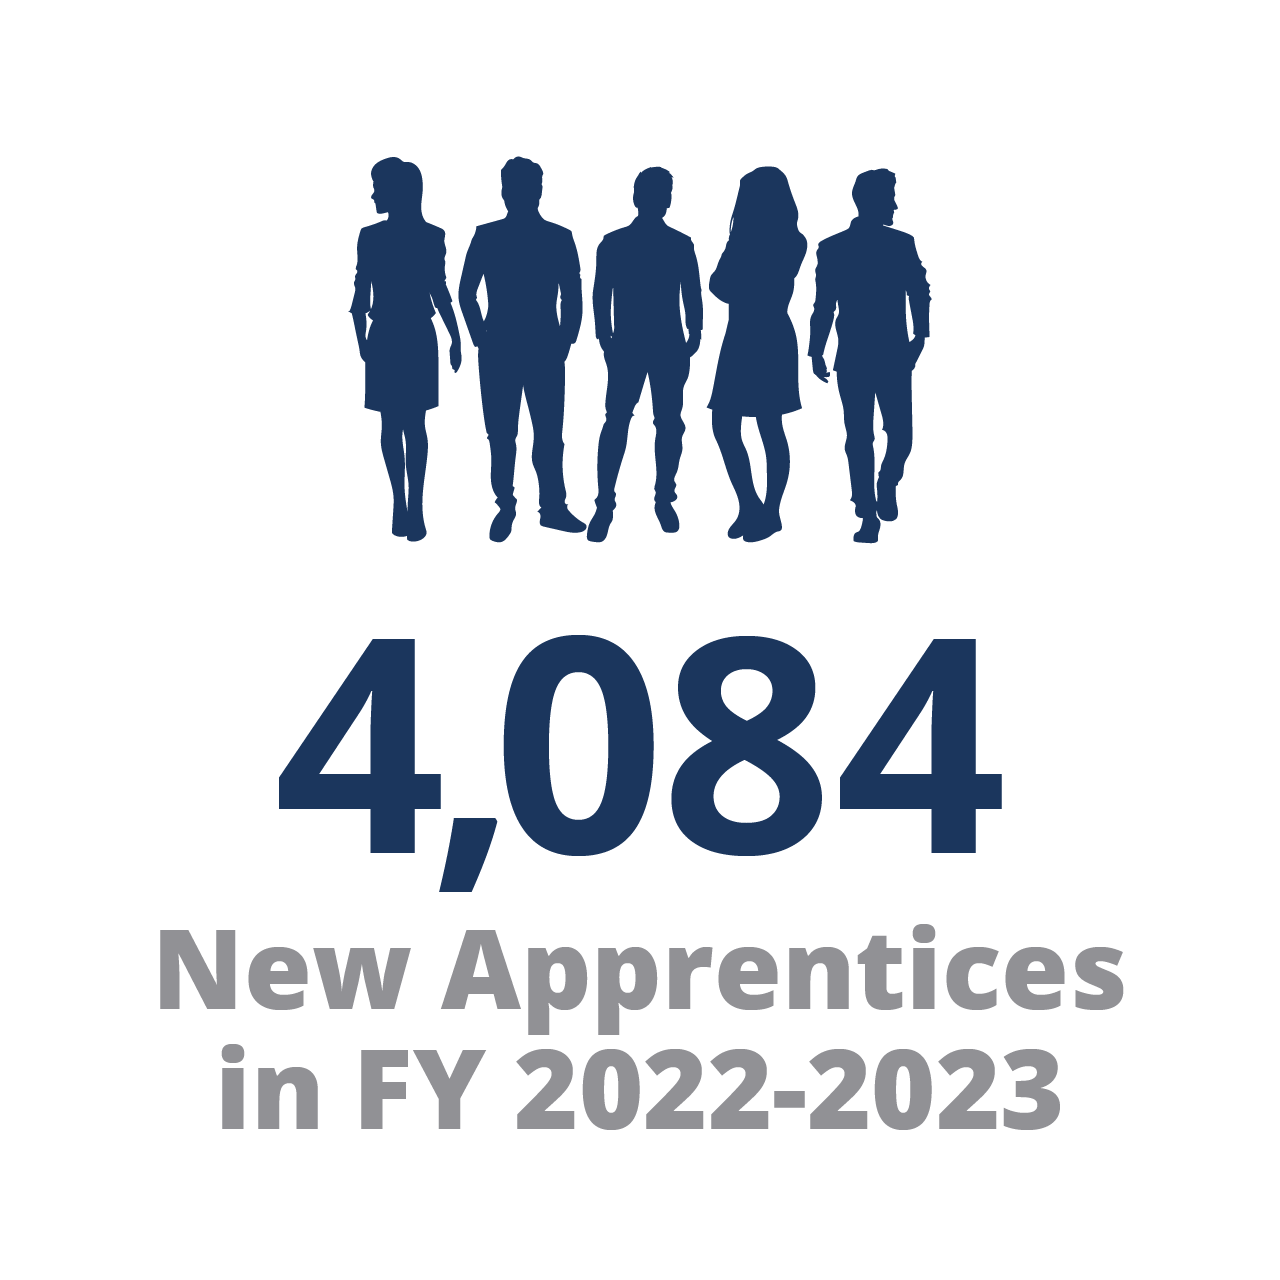 2,994 New Apprentices in 2021